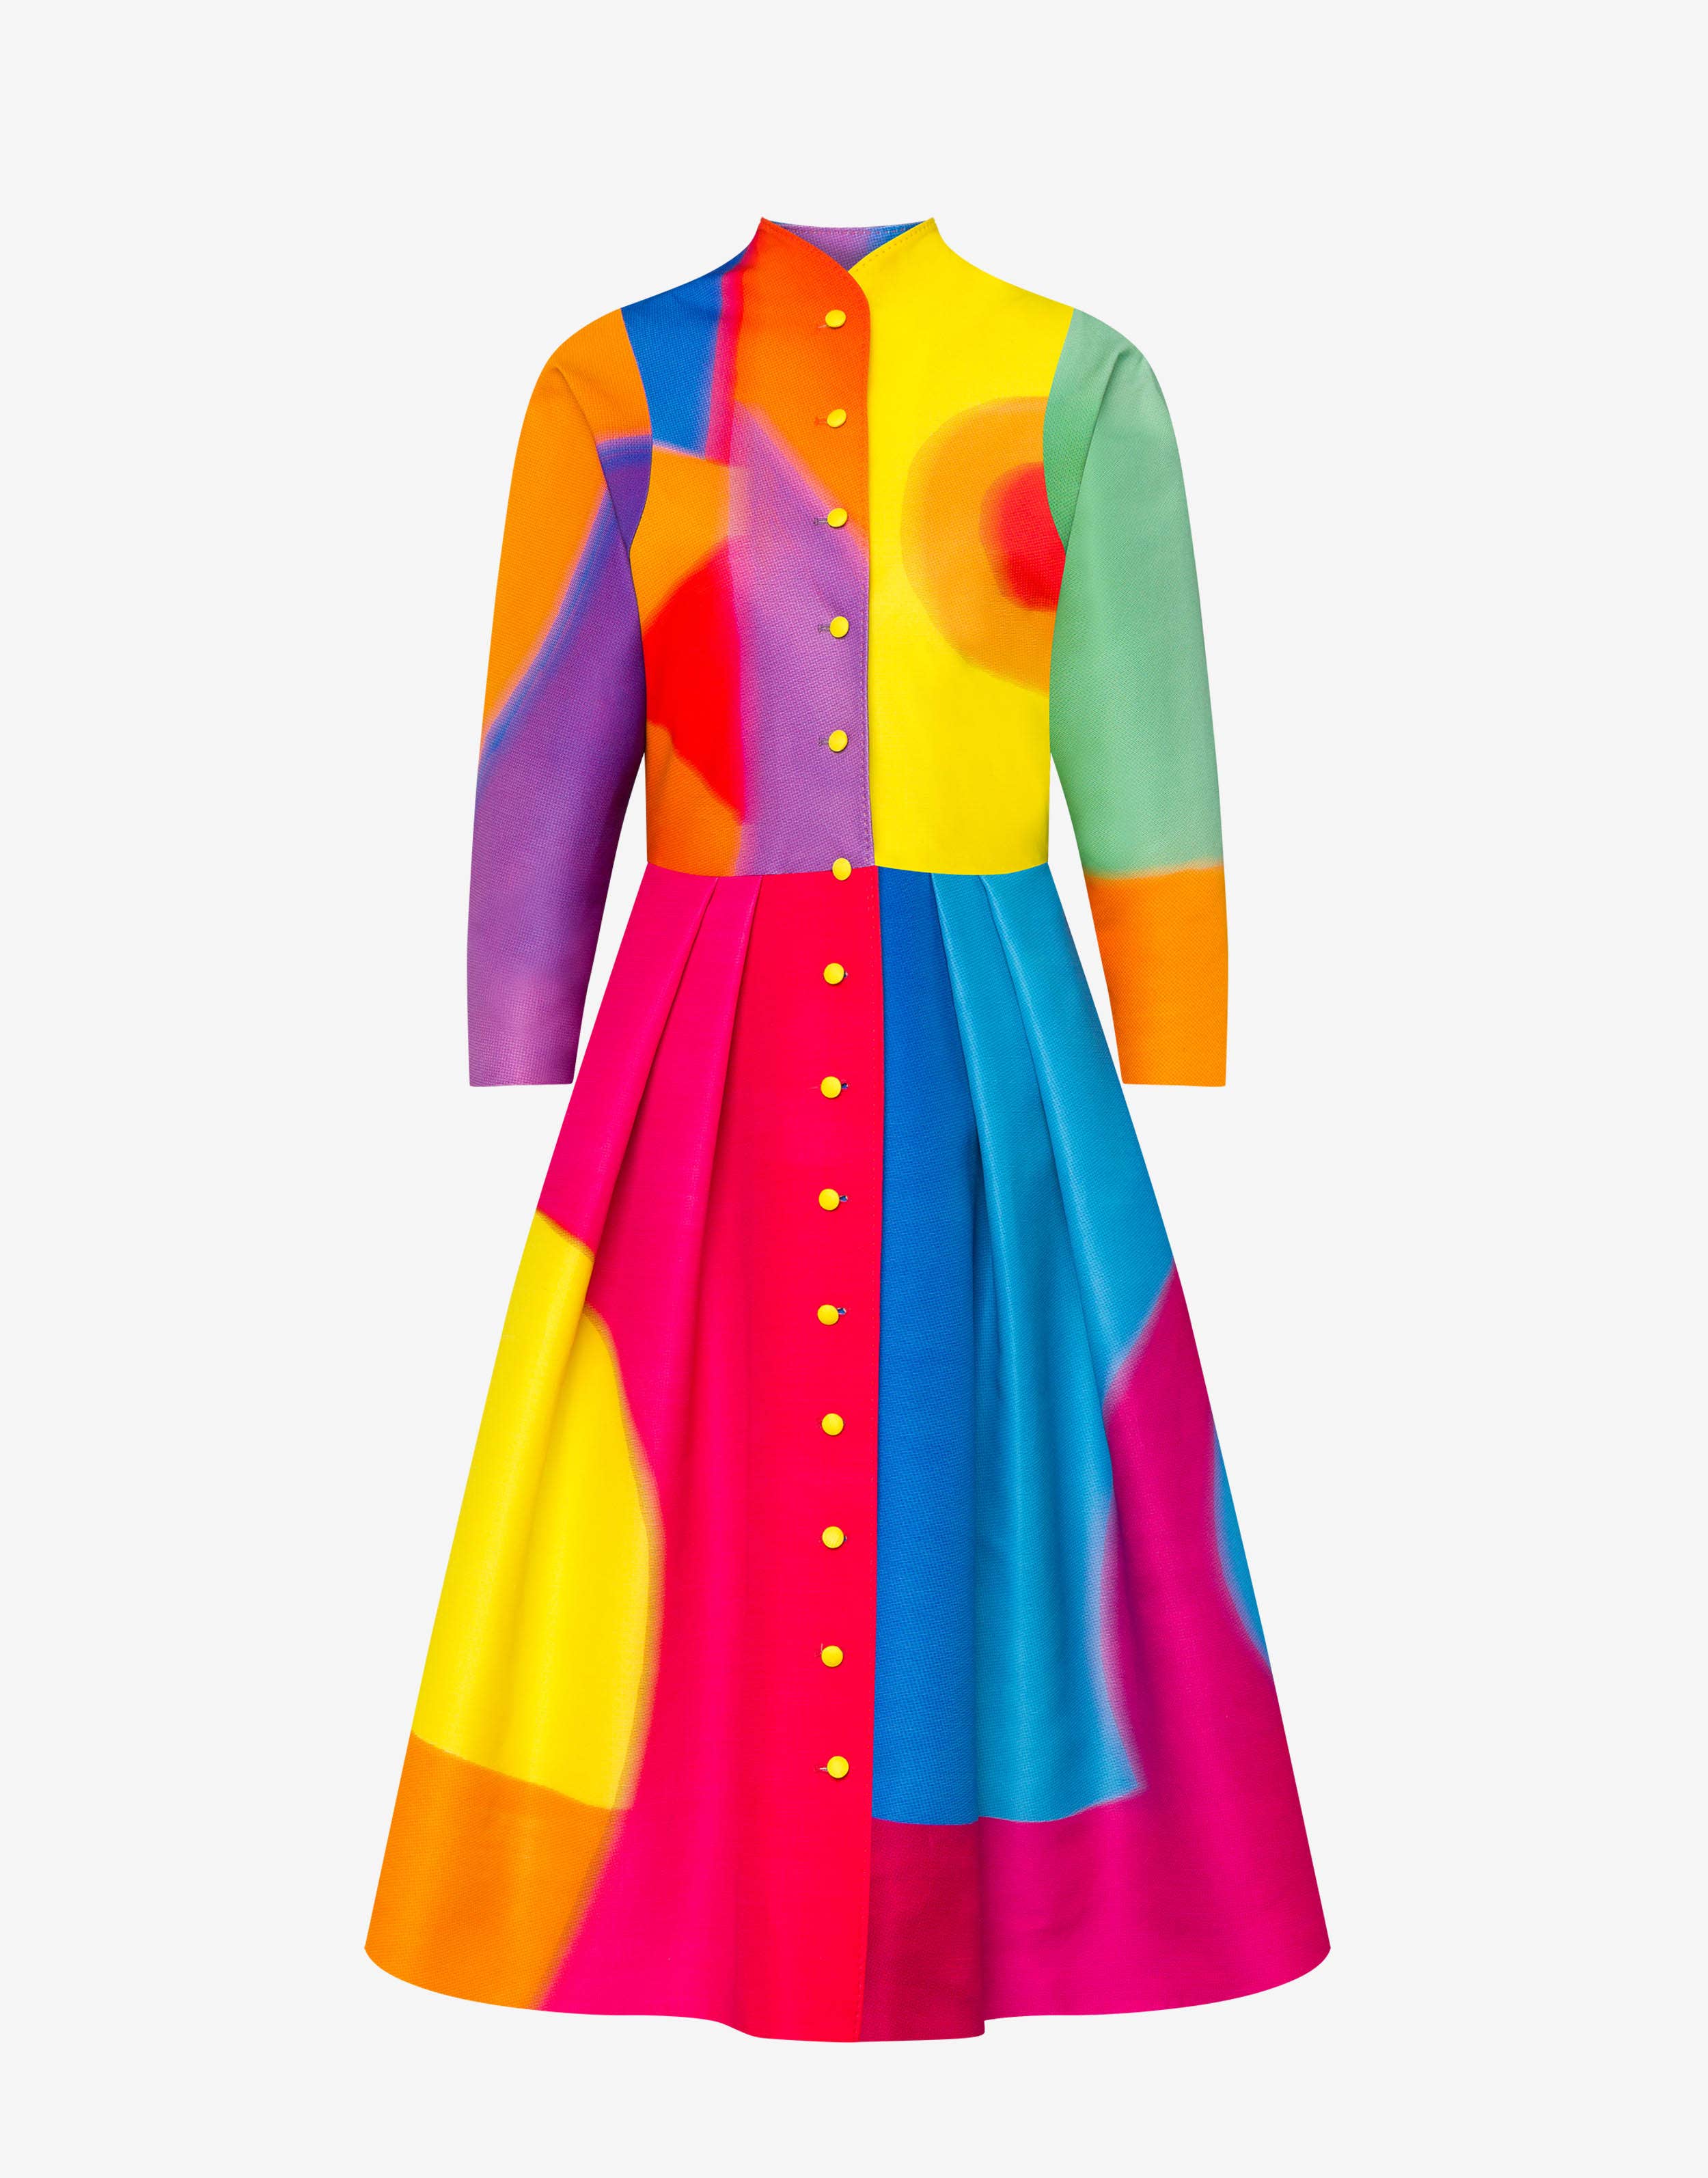 Vestido de duquesa Projection Print | Moschino Official Store